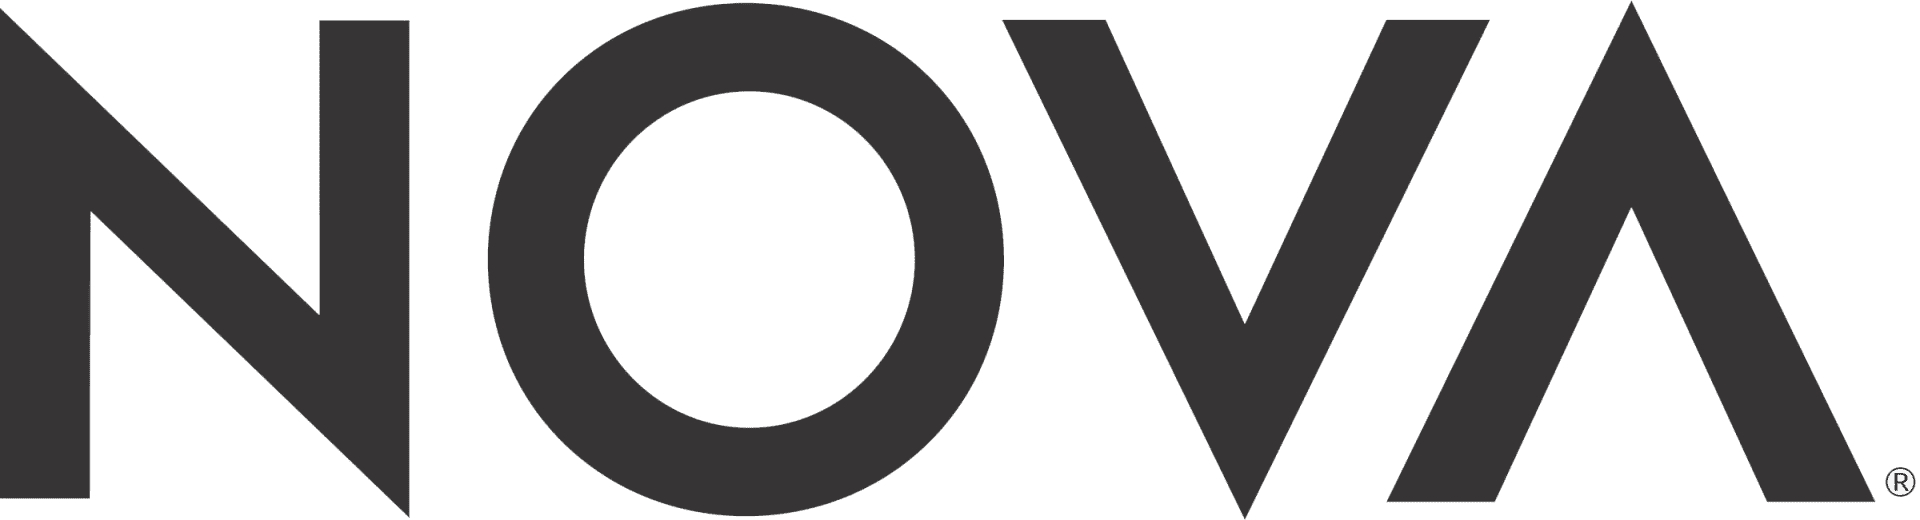 Nova лого. Nova надпись. Телеканал Nova Болгария логотип. Nova paka лого.